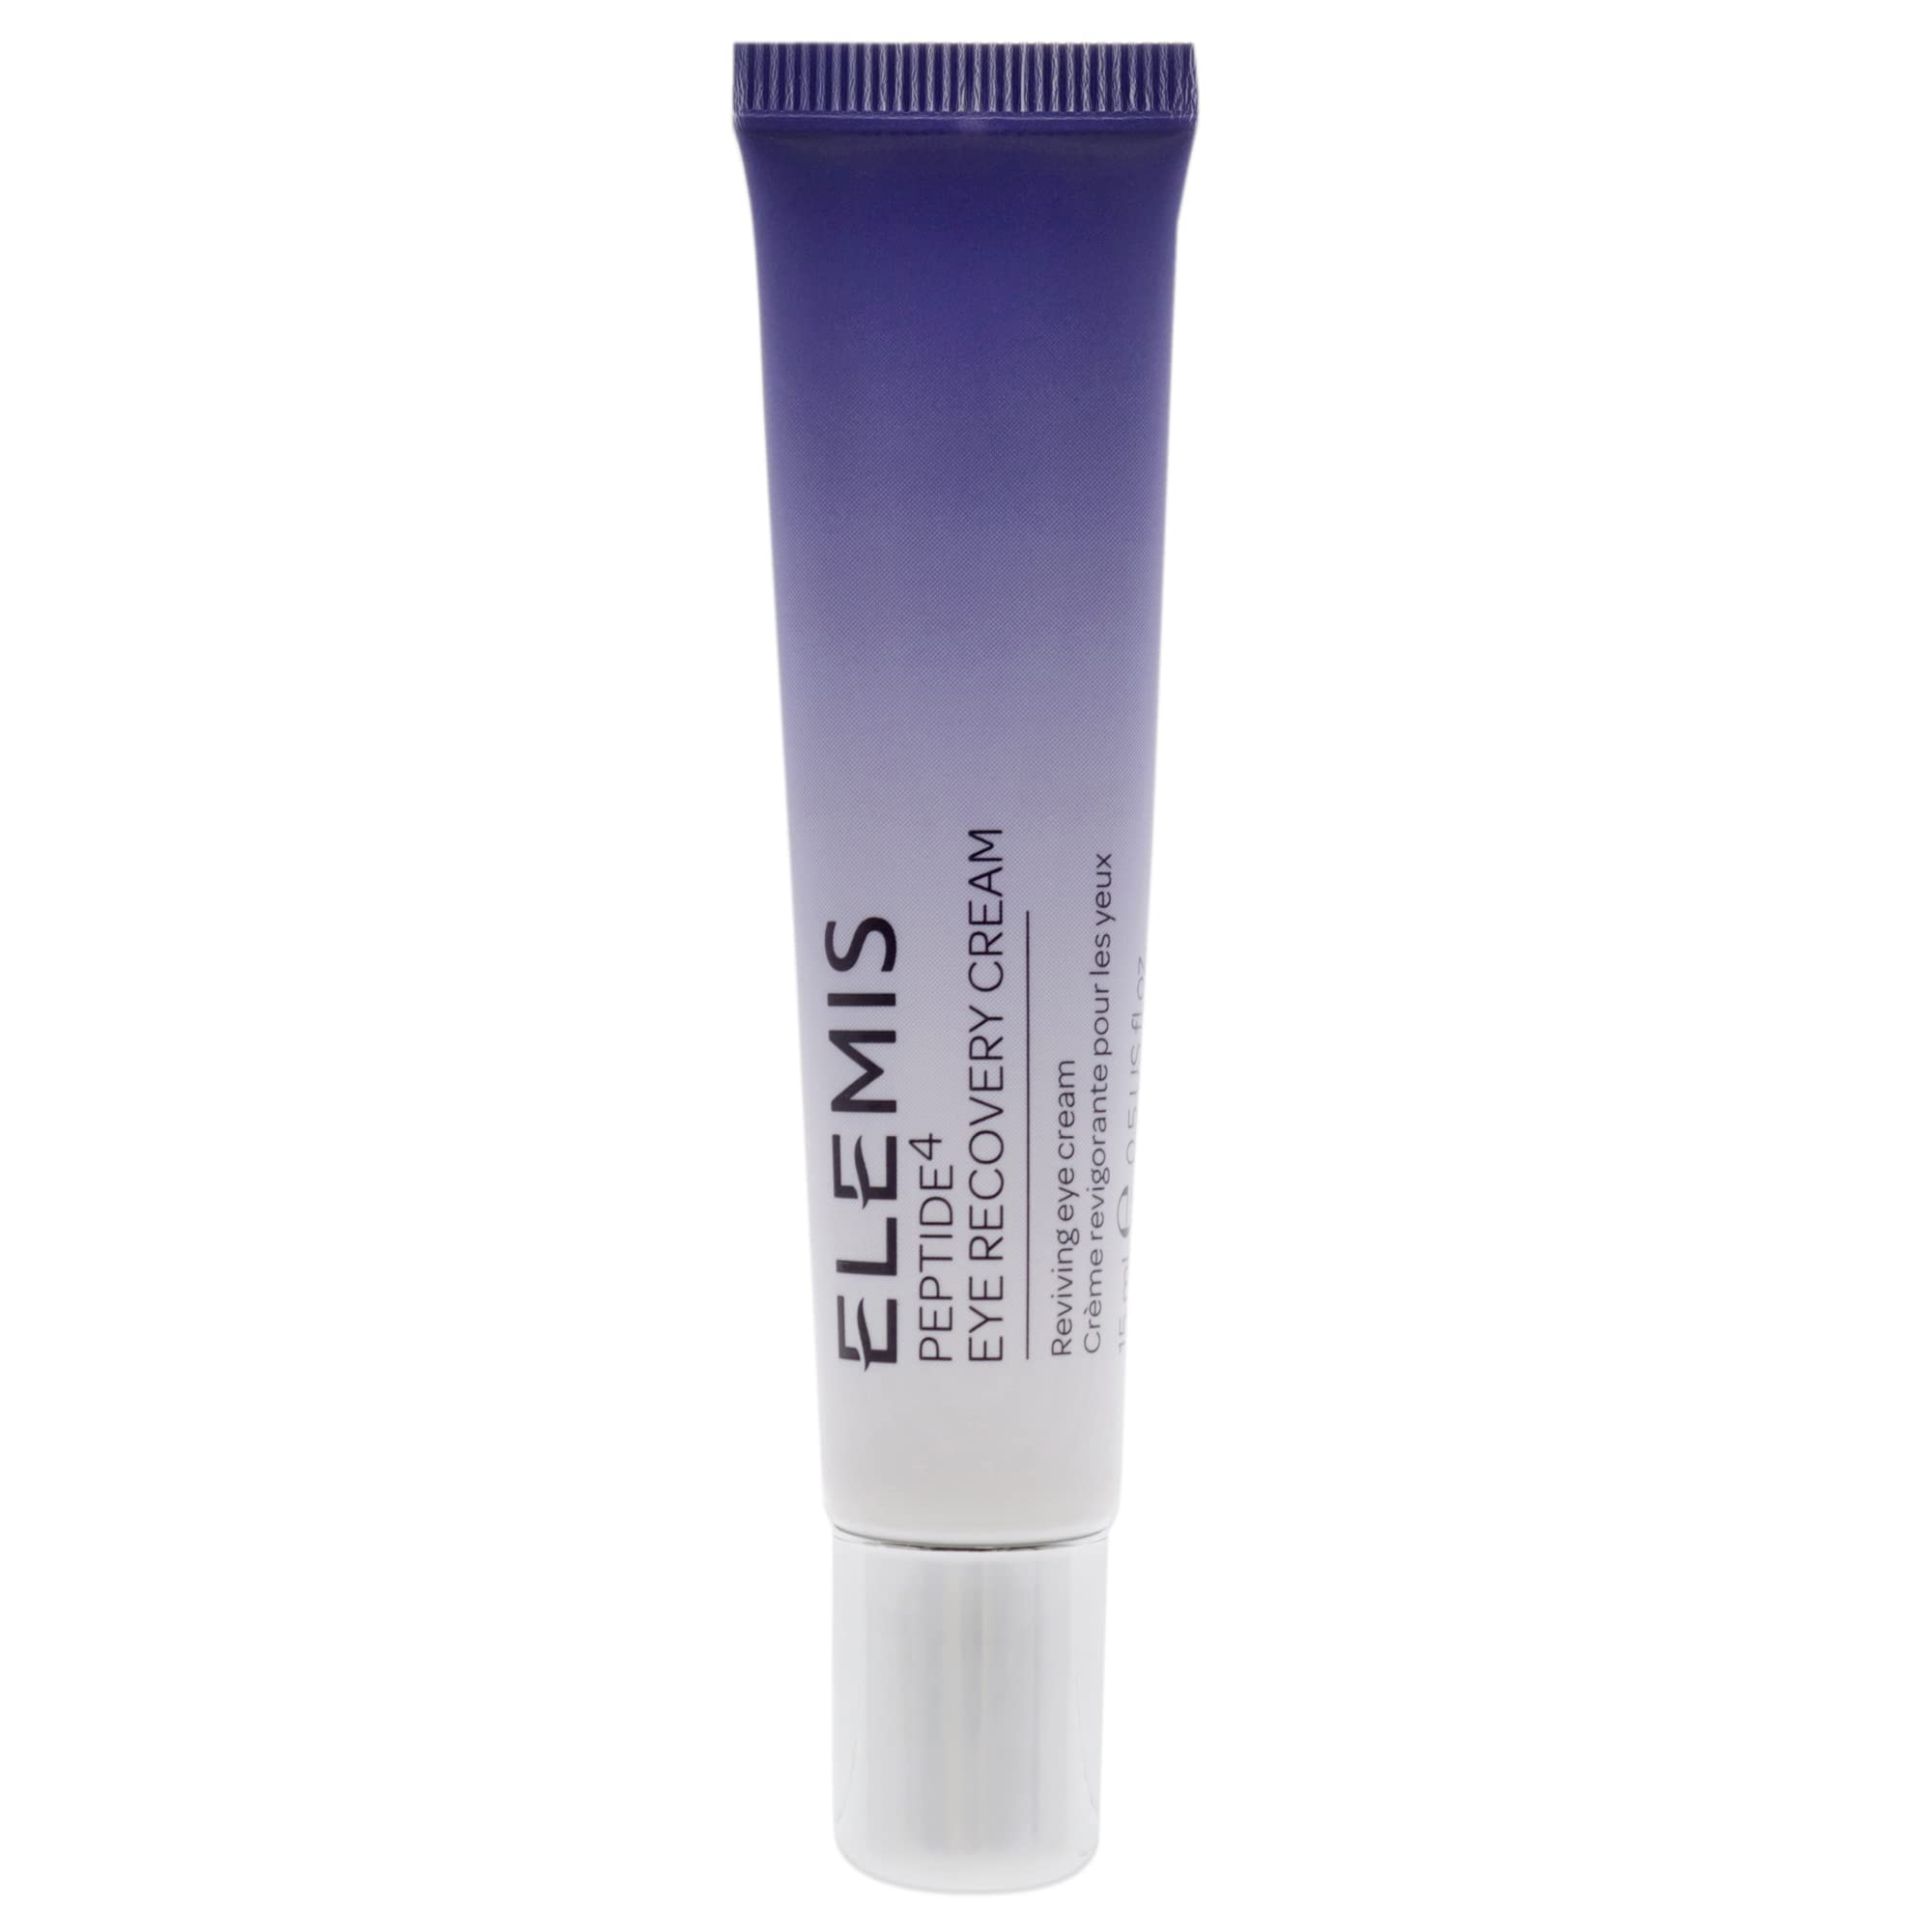 ELEMIS Peptide4 Eye Recovery Cream, Reviving Eye Cream, 0.5 Fl Oz (Pack of 1)